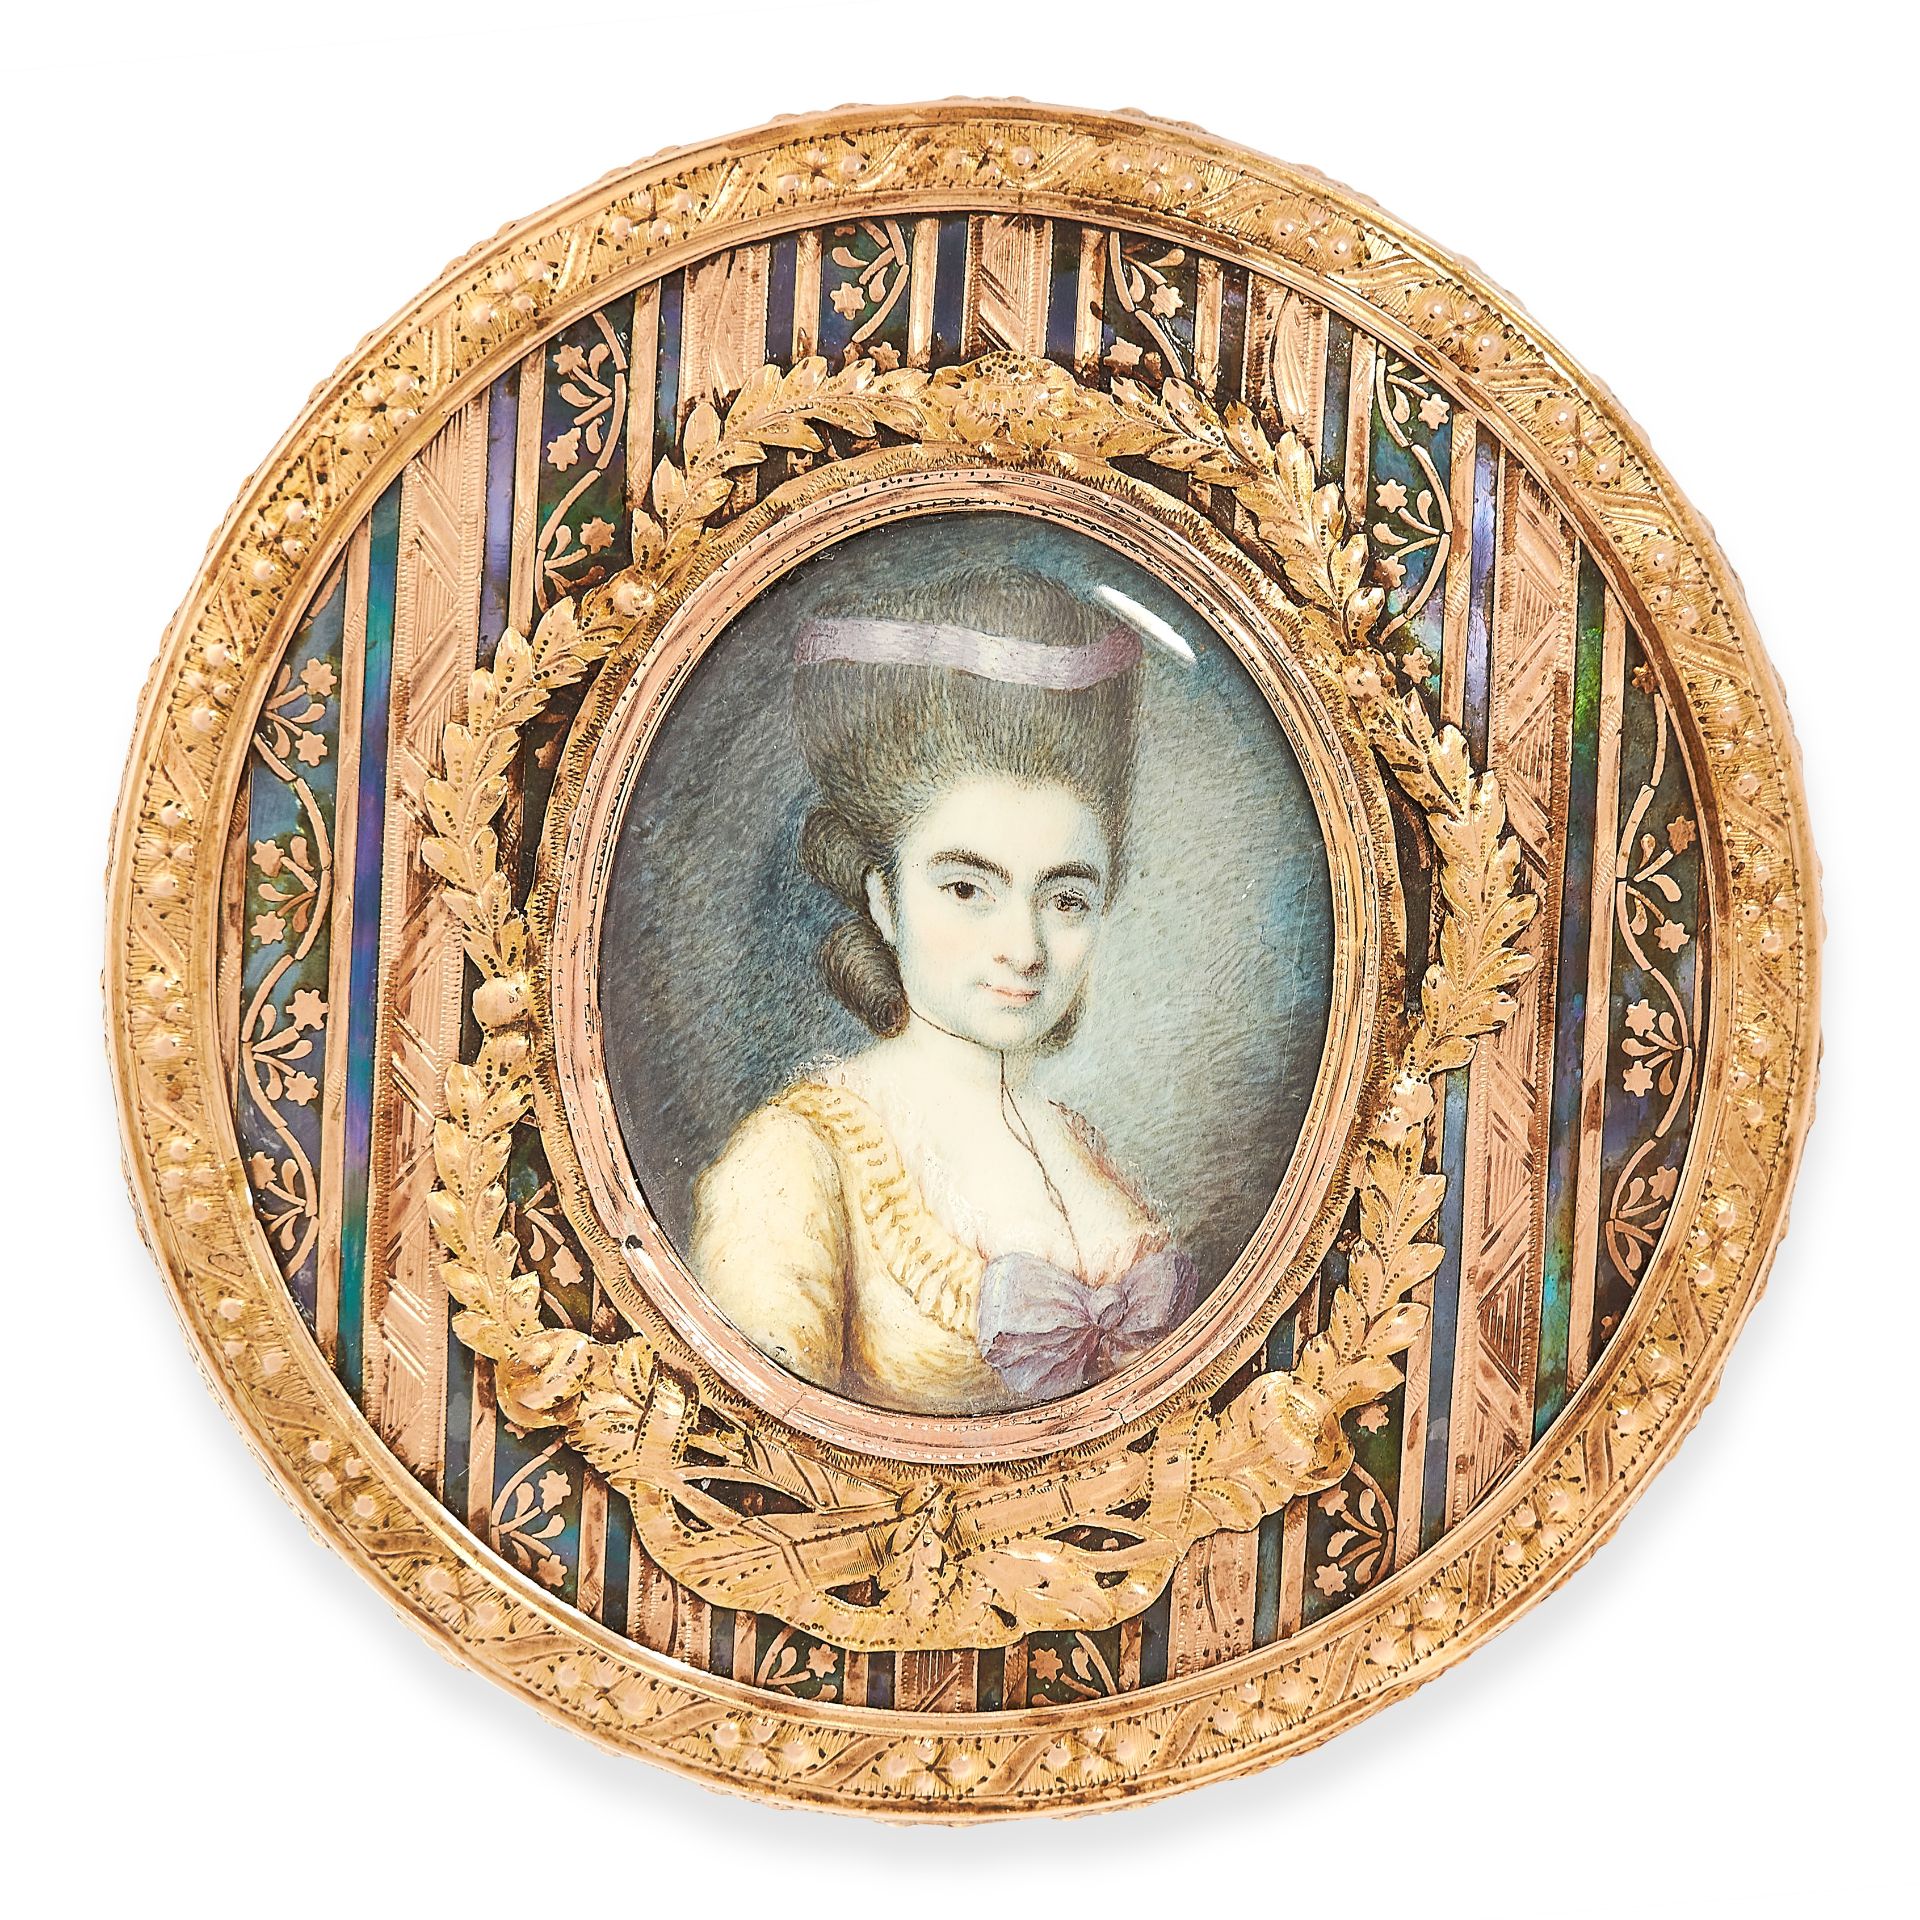 ANTIQUE LOUIS XV TORTOISESHELL AND ABALONE PORTRAIT MINIATURE SNUFF BOX, PARIS 1772 in 18ct yellow